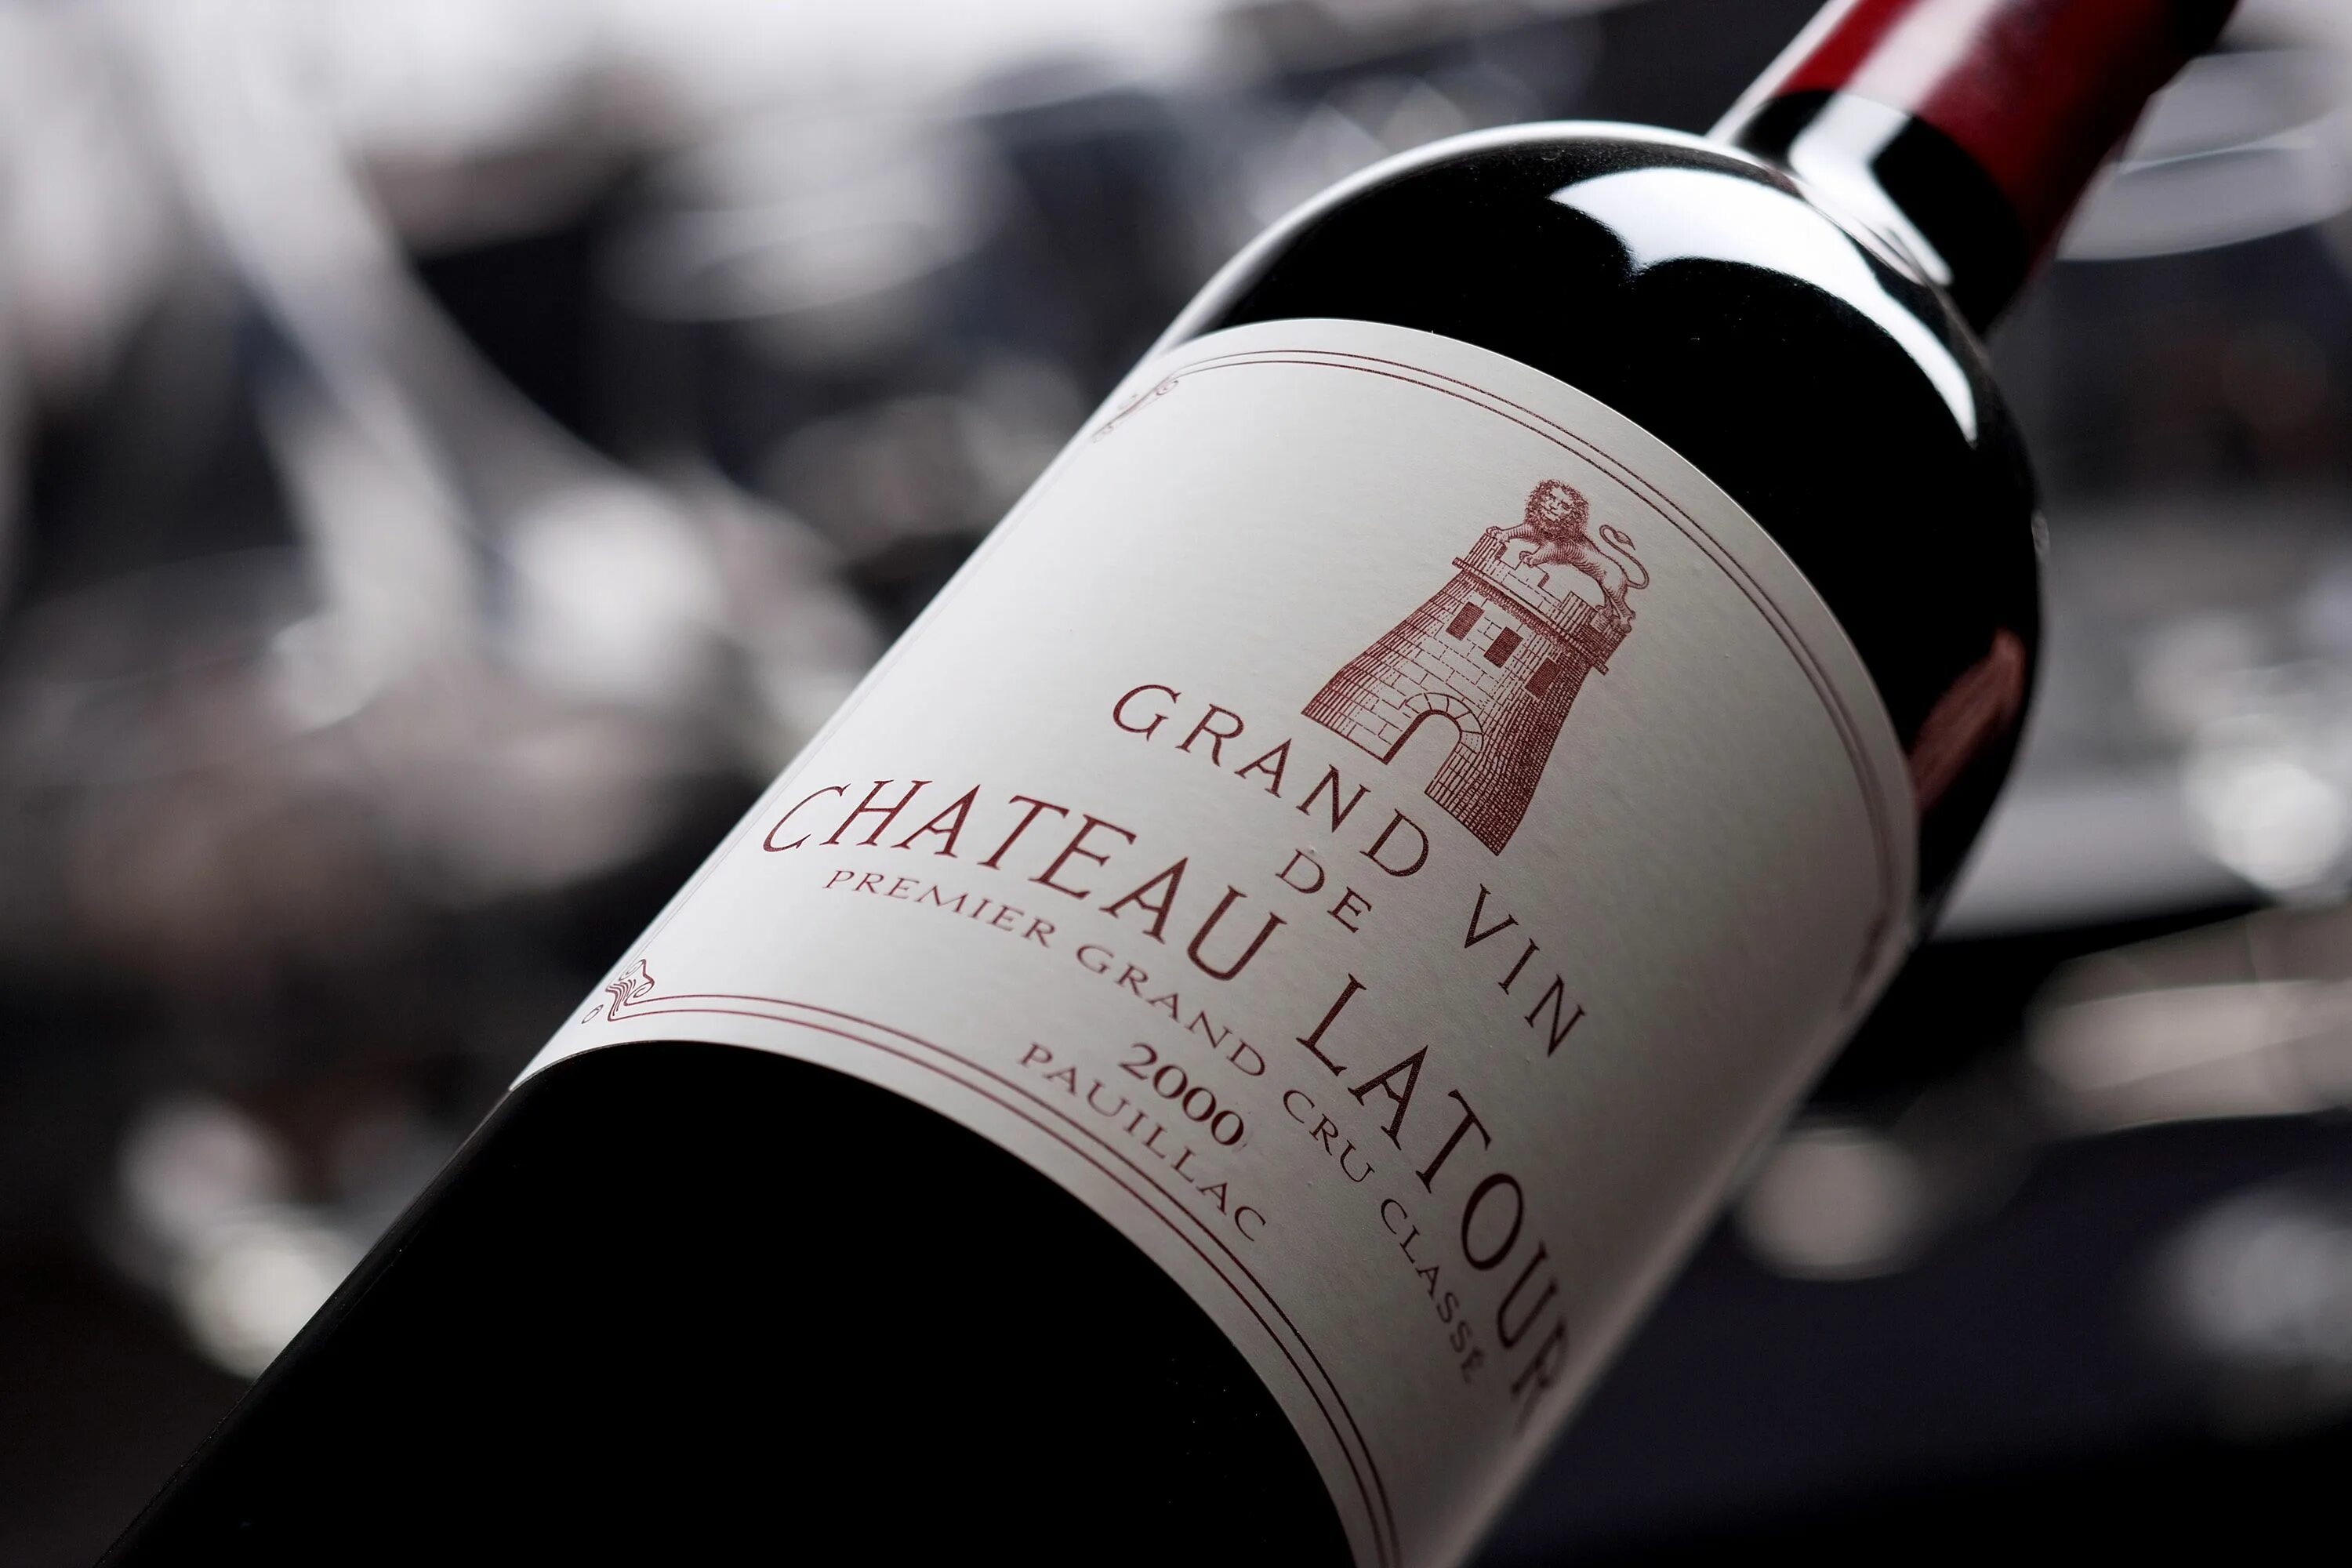 Chateau Latour Bordeaux вино. Latour (Латур) вино Франции. Шато Латур винодельня. Вино Шато Латур 1886.